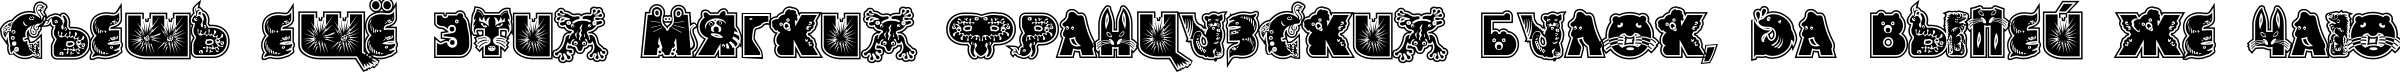 Пример написания шрифтом FK Critter Collage.kz текста на русском